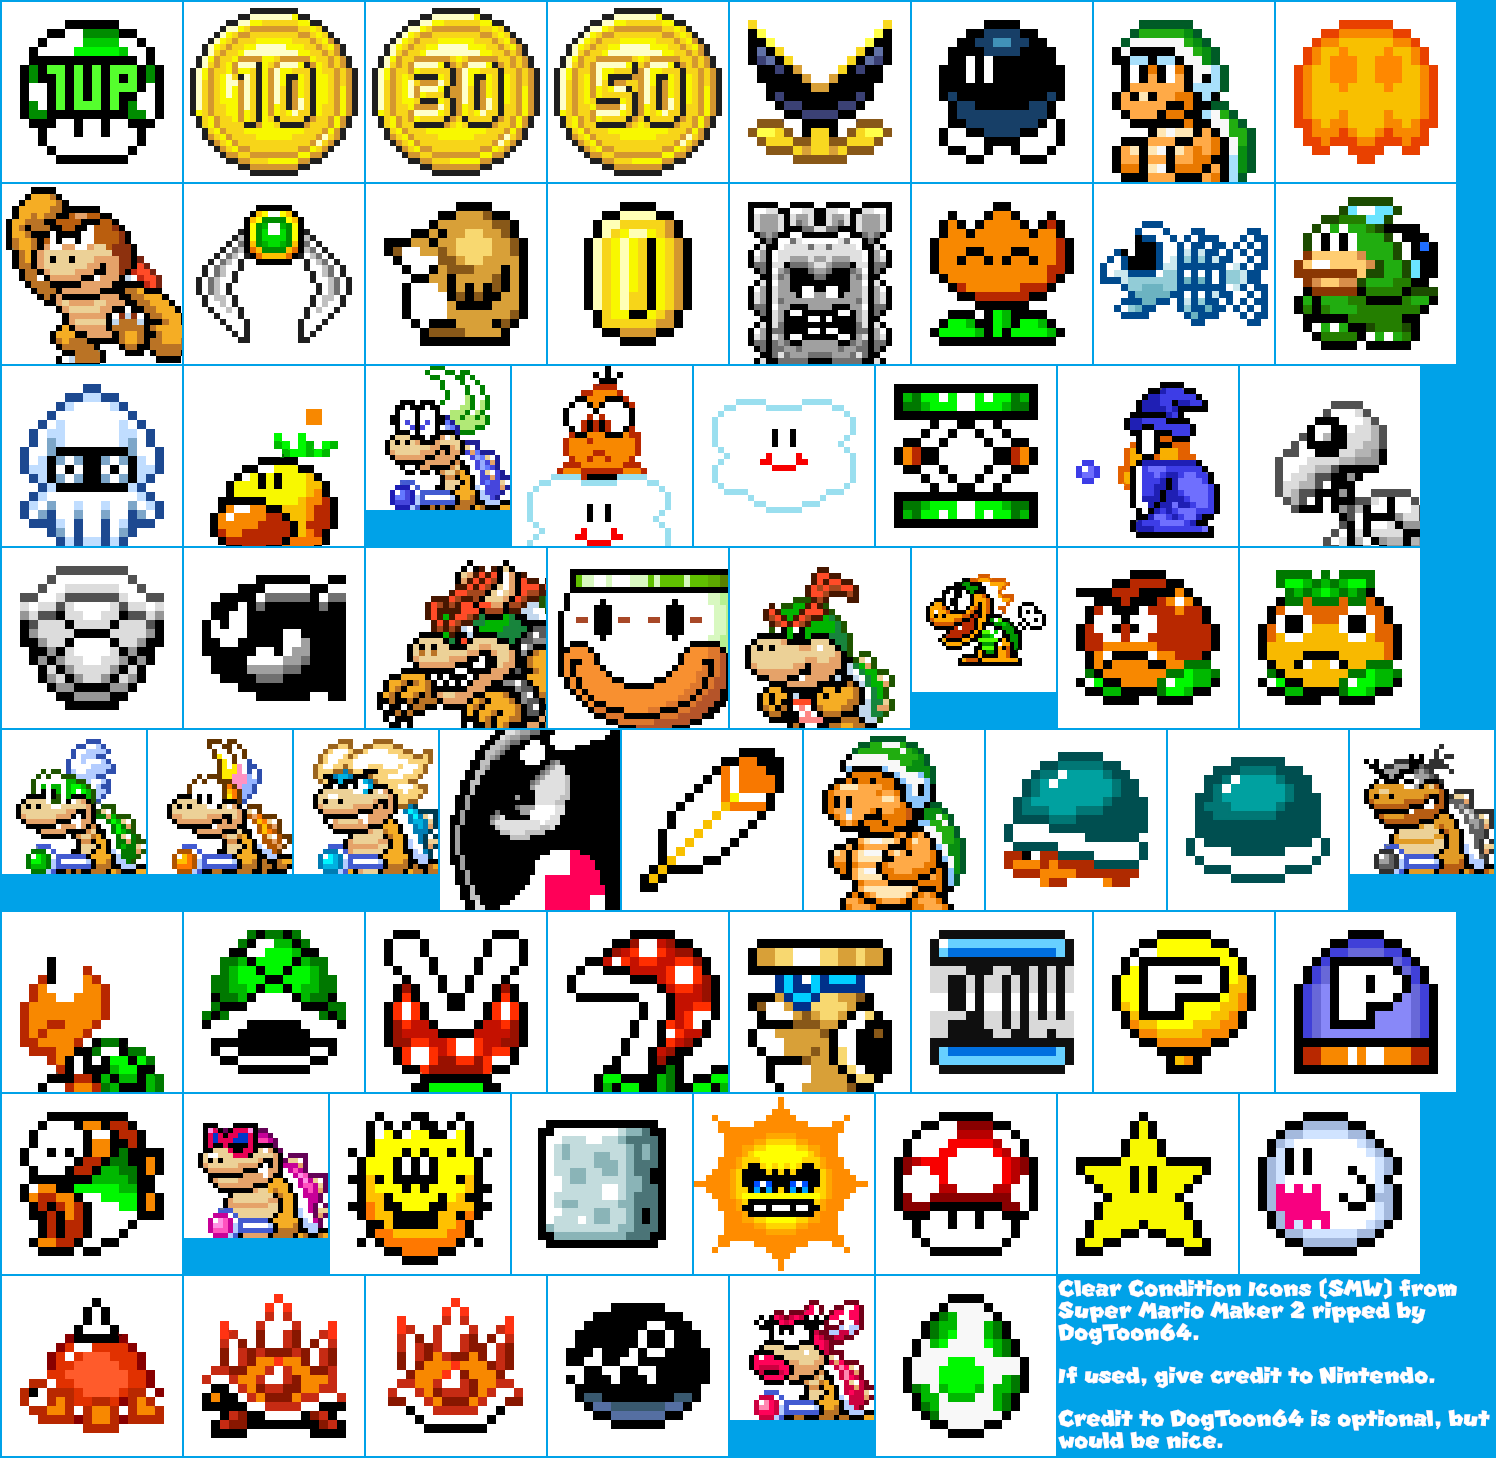 Super Mario Maker 2 - Clear Condition Icons (SMW)